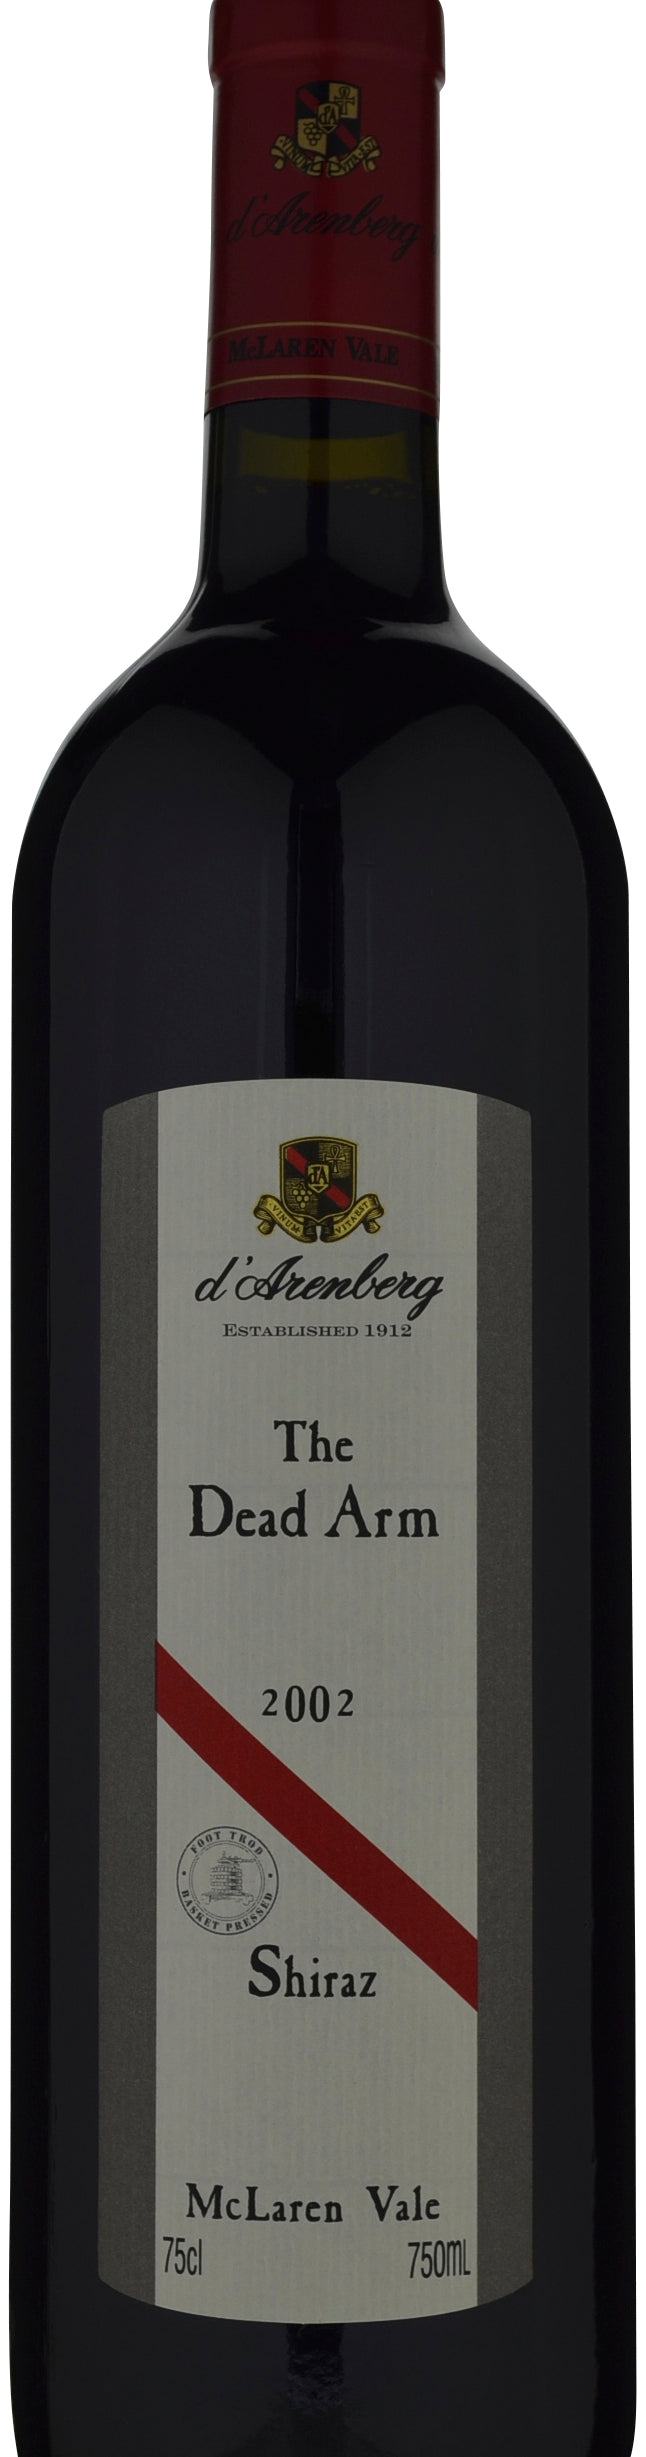 d'Arenberg The Dead Arm Shiraz 2002